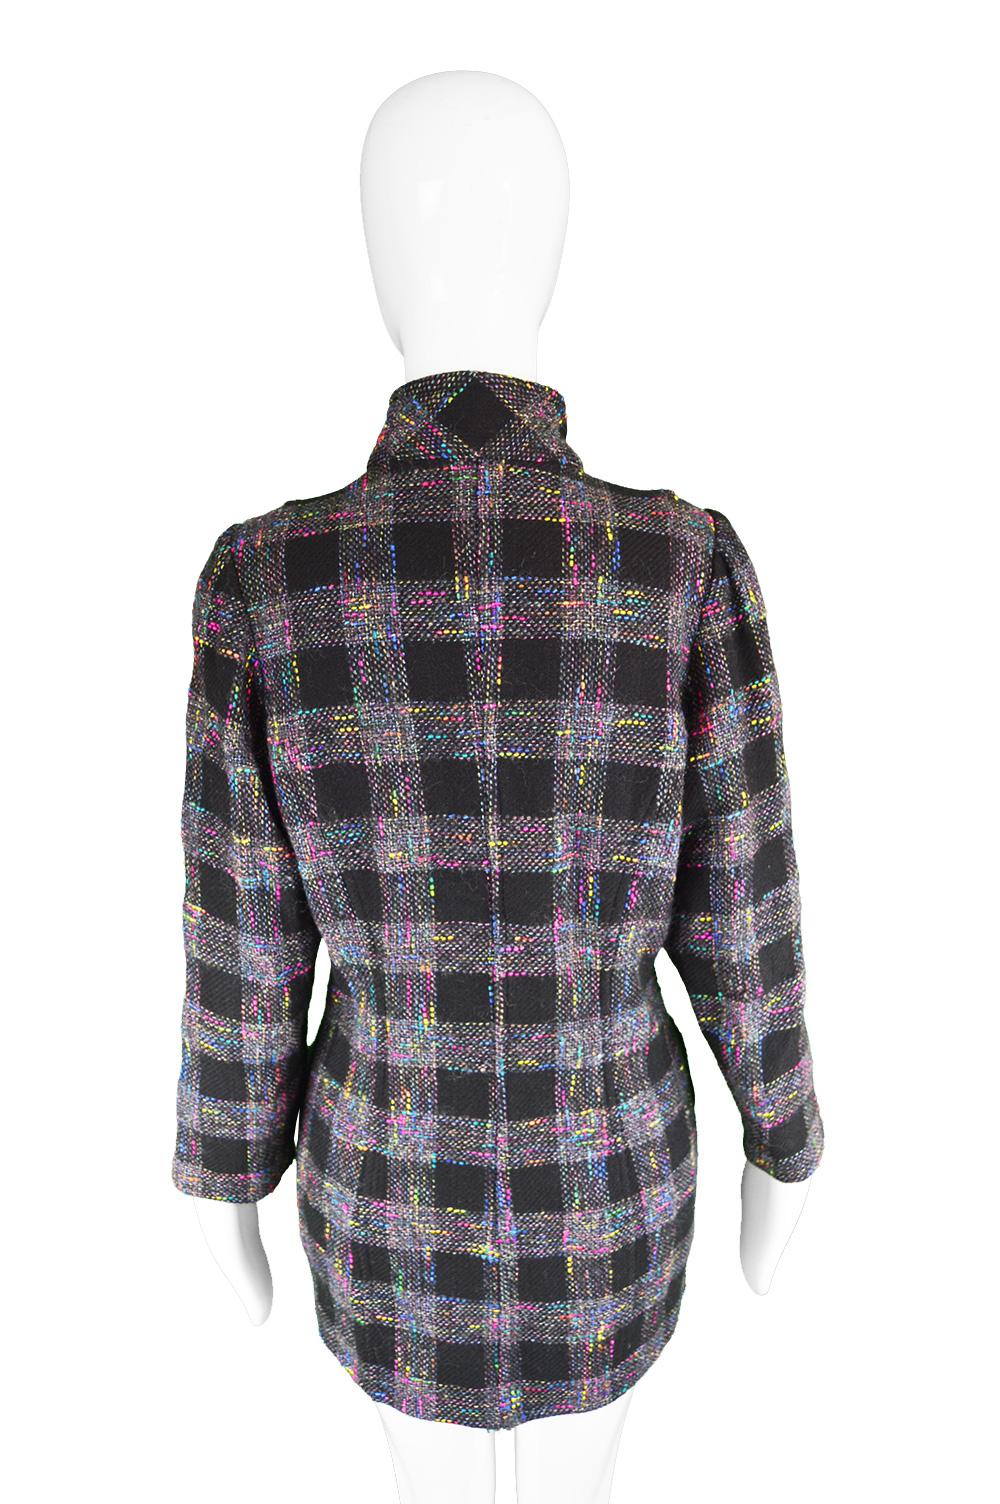 Emanuel Ungaro Vintage Black & Rainbow Boucle Wool Tweed Jacket, 1980s 4